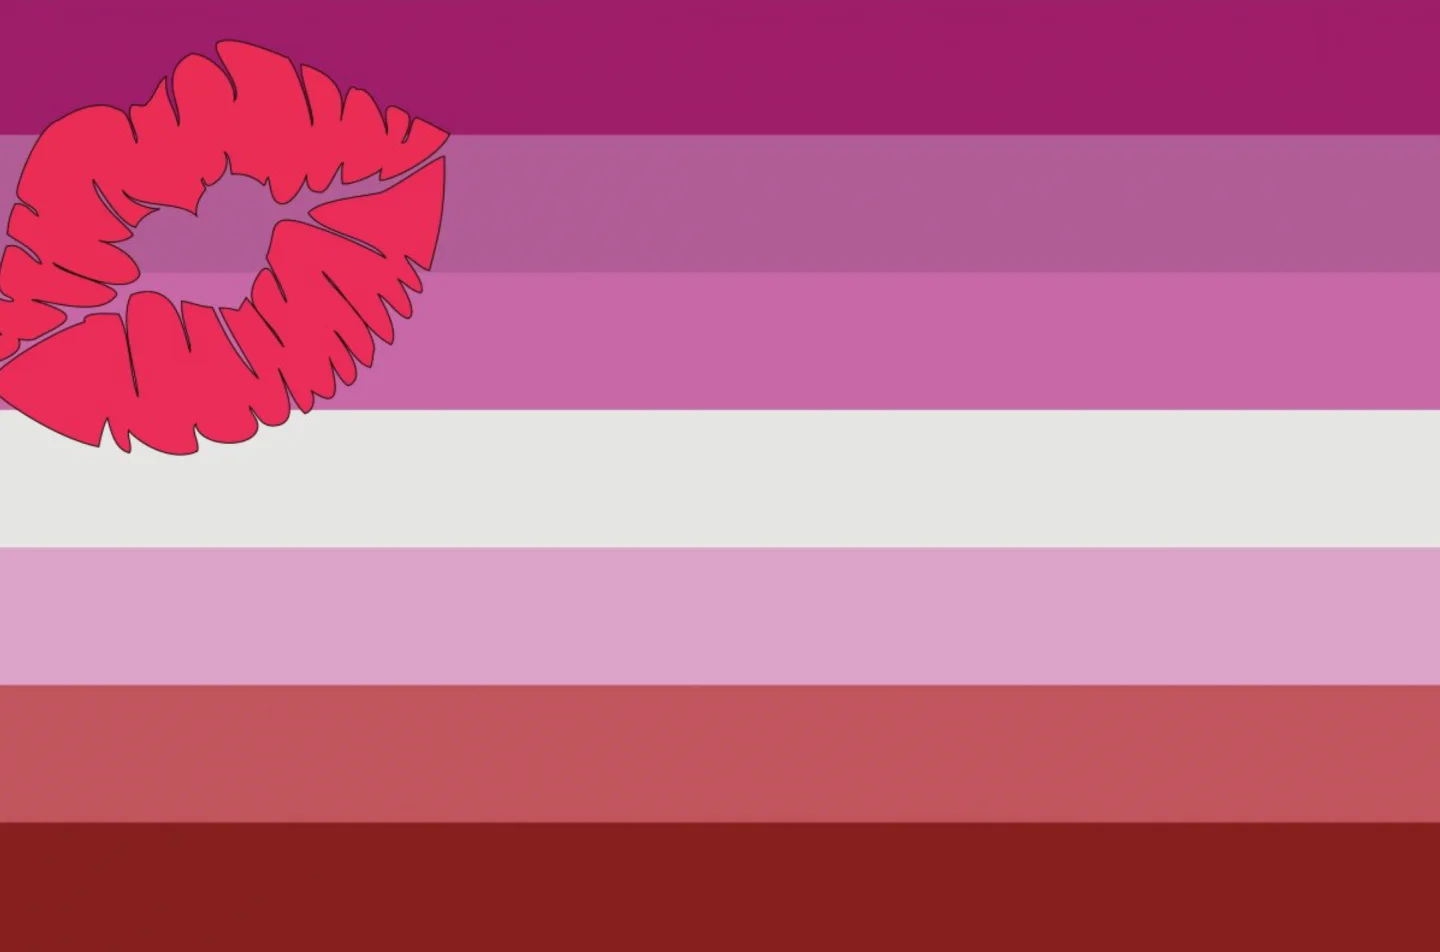 The Lipstick Lesbian Flag